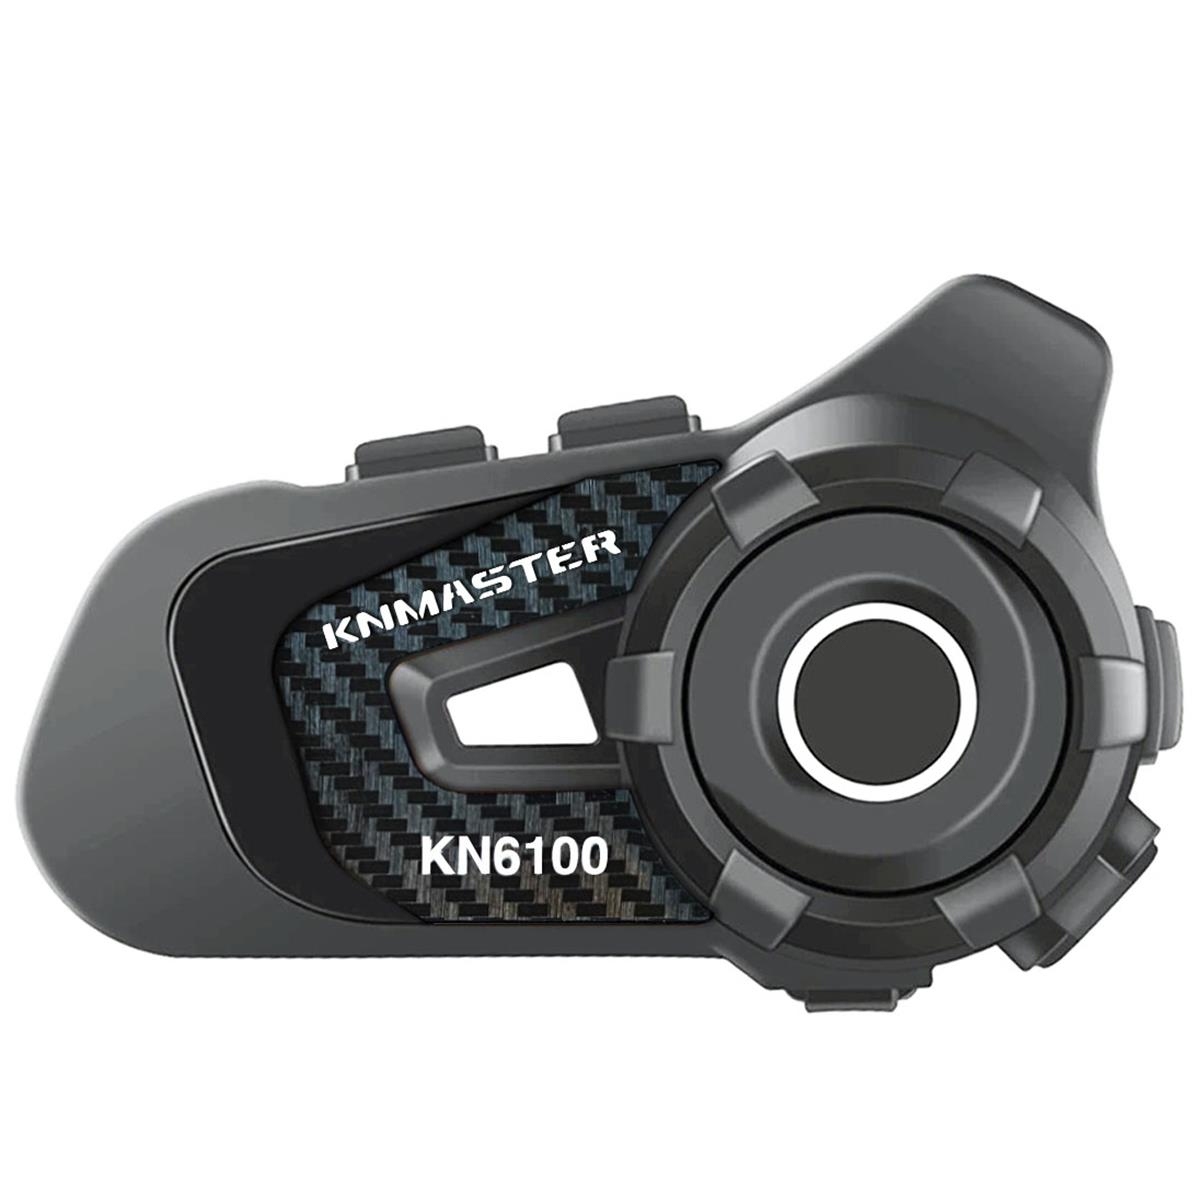 Knmaster KN6100 Bluetooth Karbon Siyah İntercom Kulaklık Seti